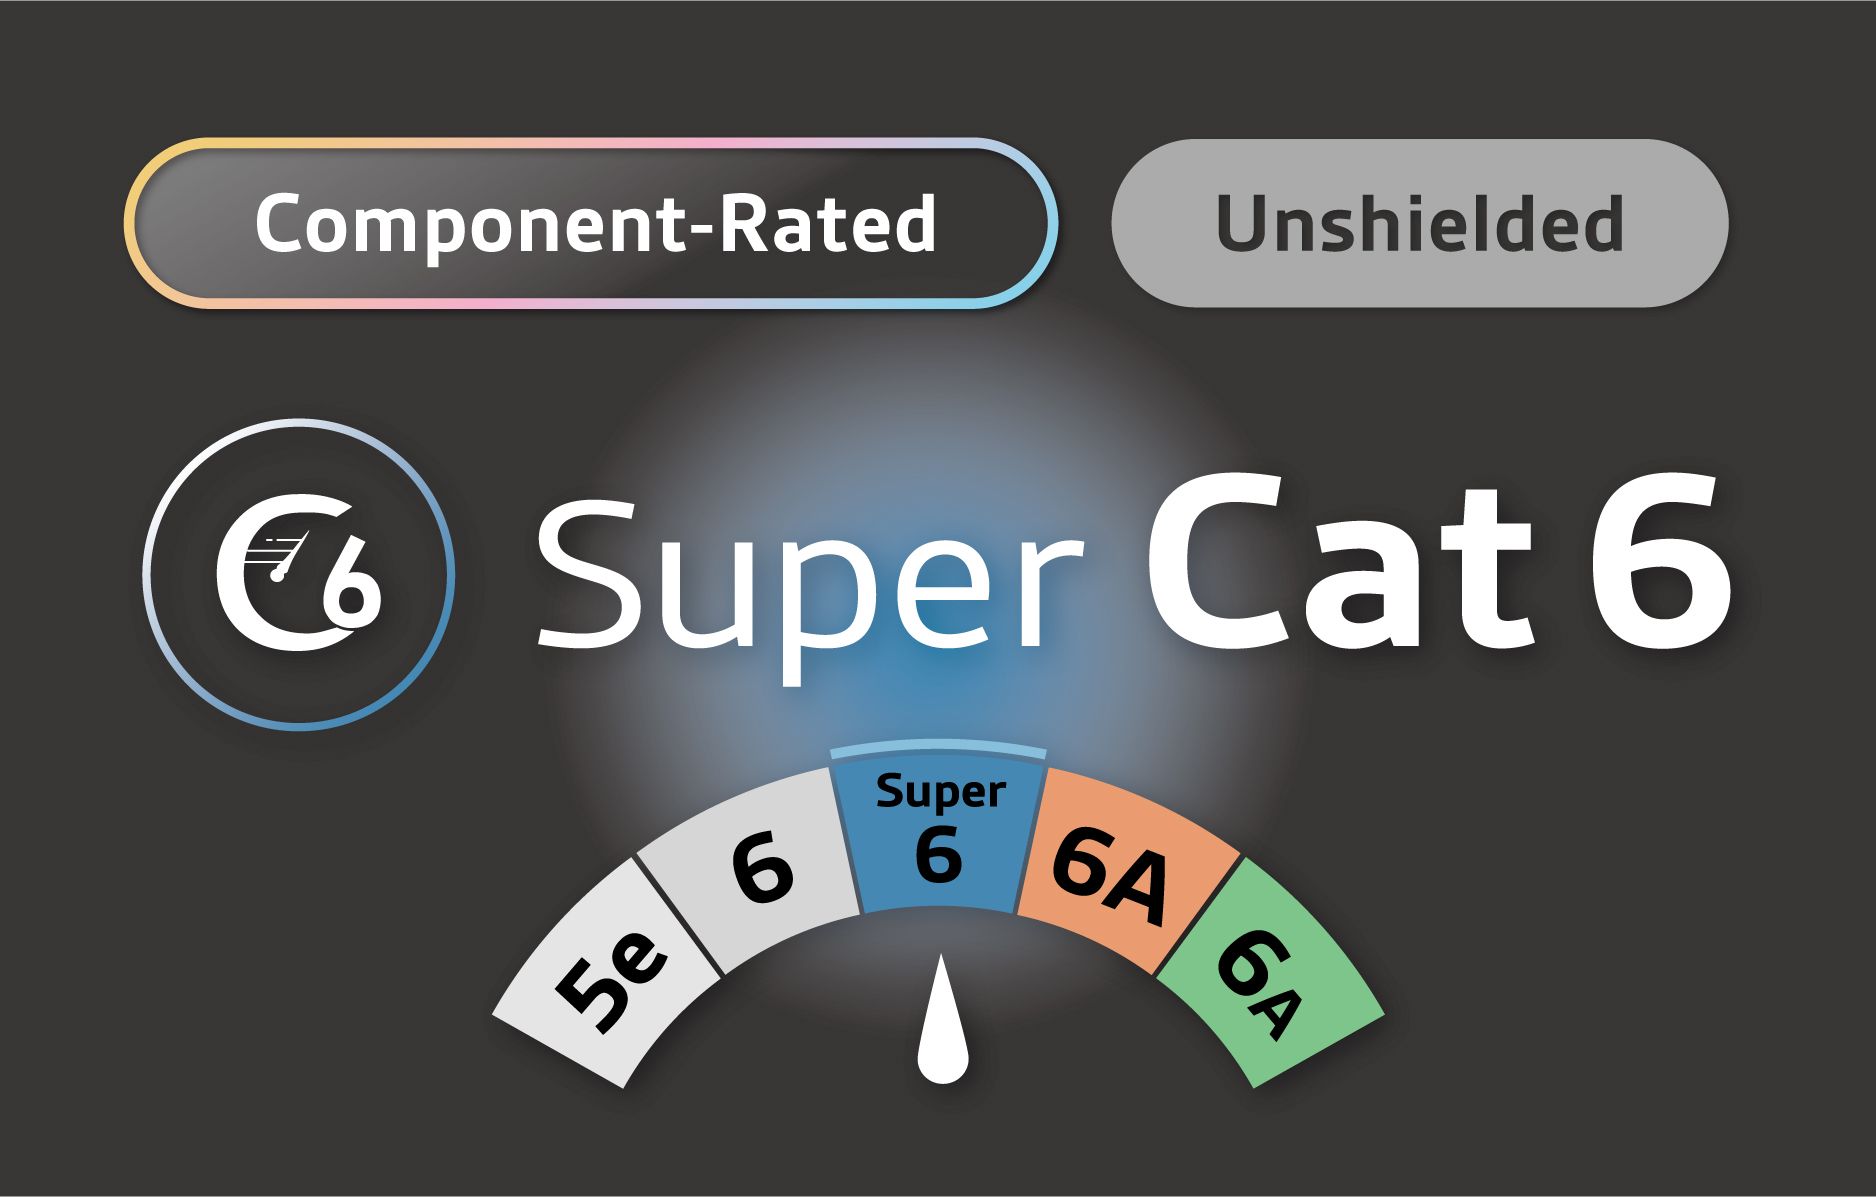 UTP - Categoría de componente Super Cat 6 - Solución sin blindaje de categoría de componente Super Cat 6